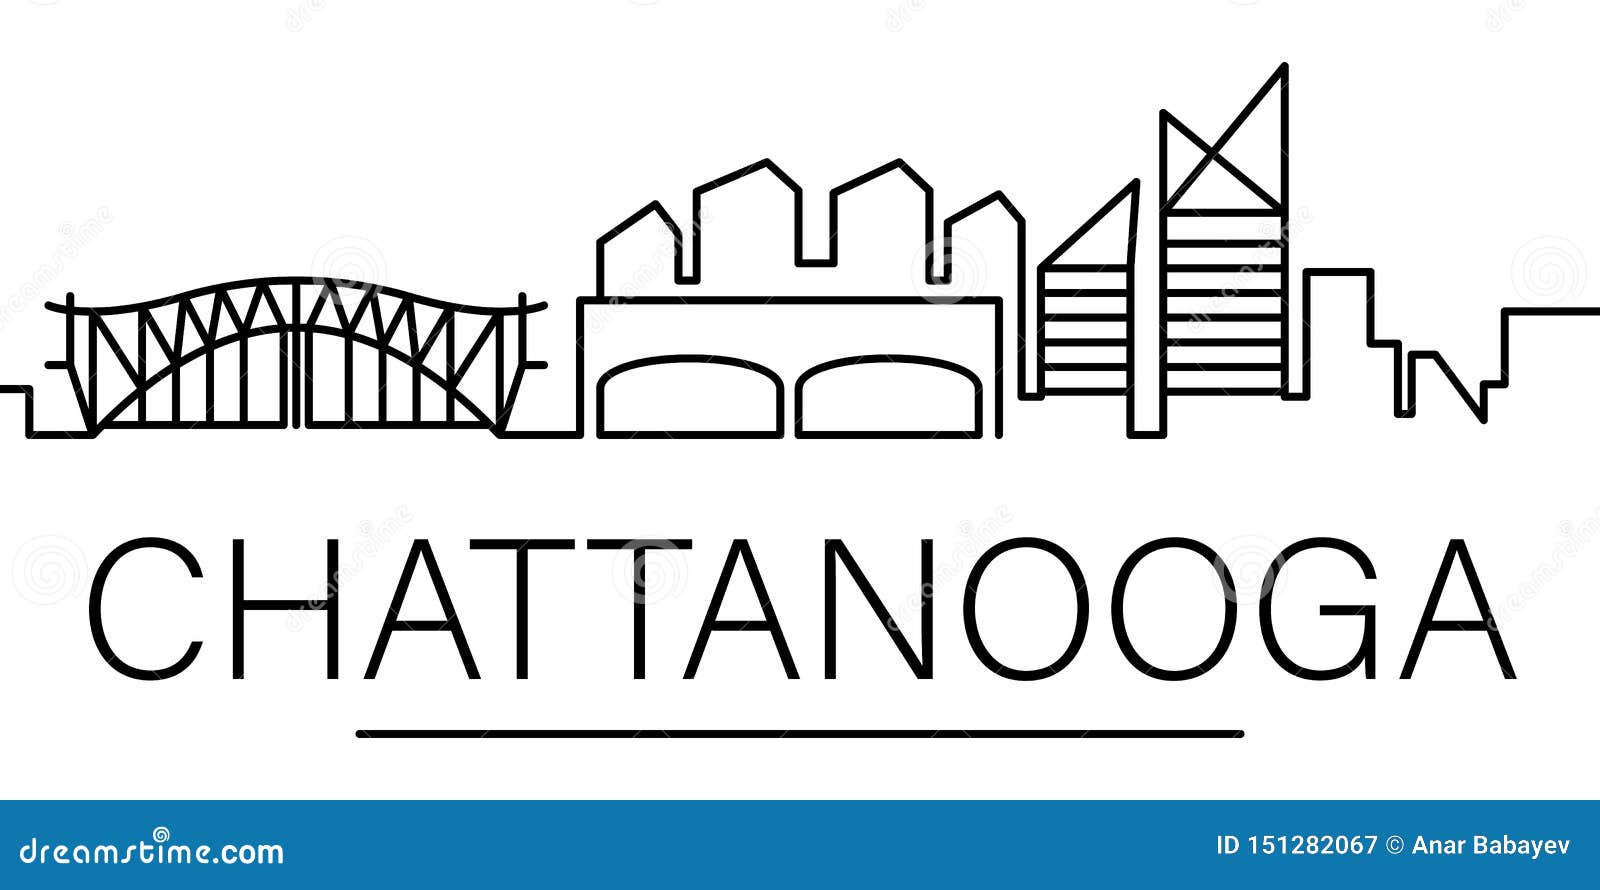 Chattanooga skyline sign